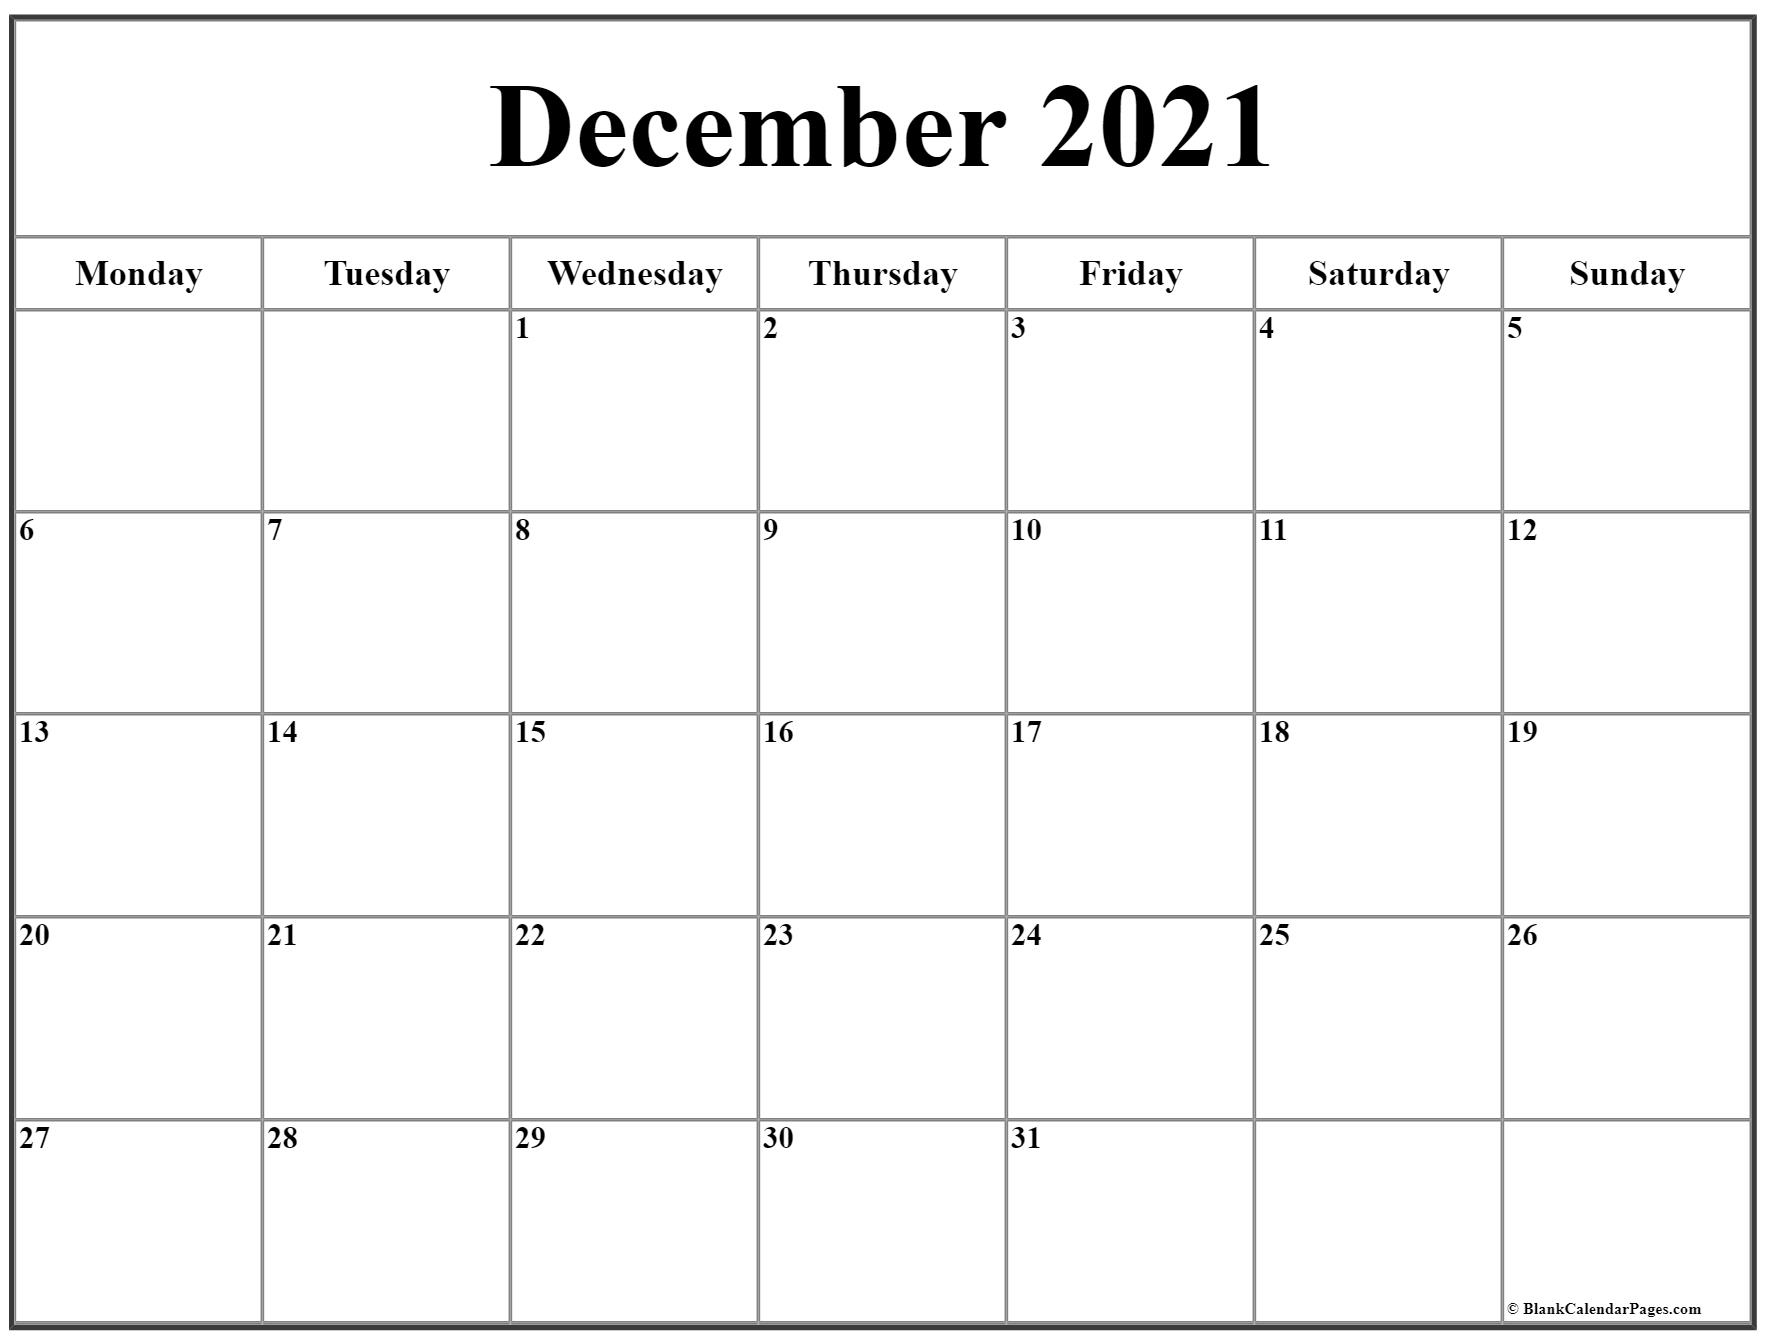 December 2021 Monday Calendar | Monday To Sunday